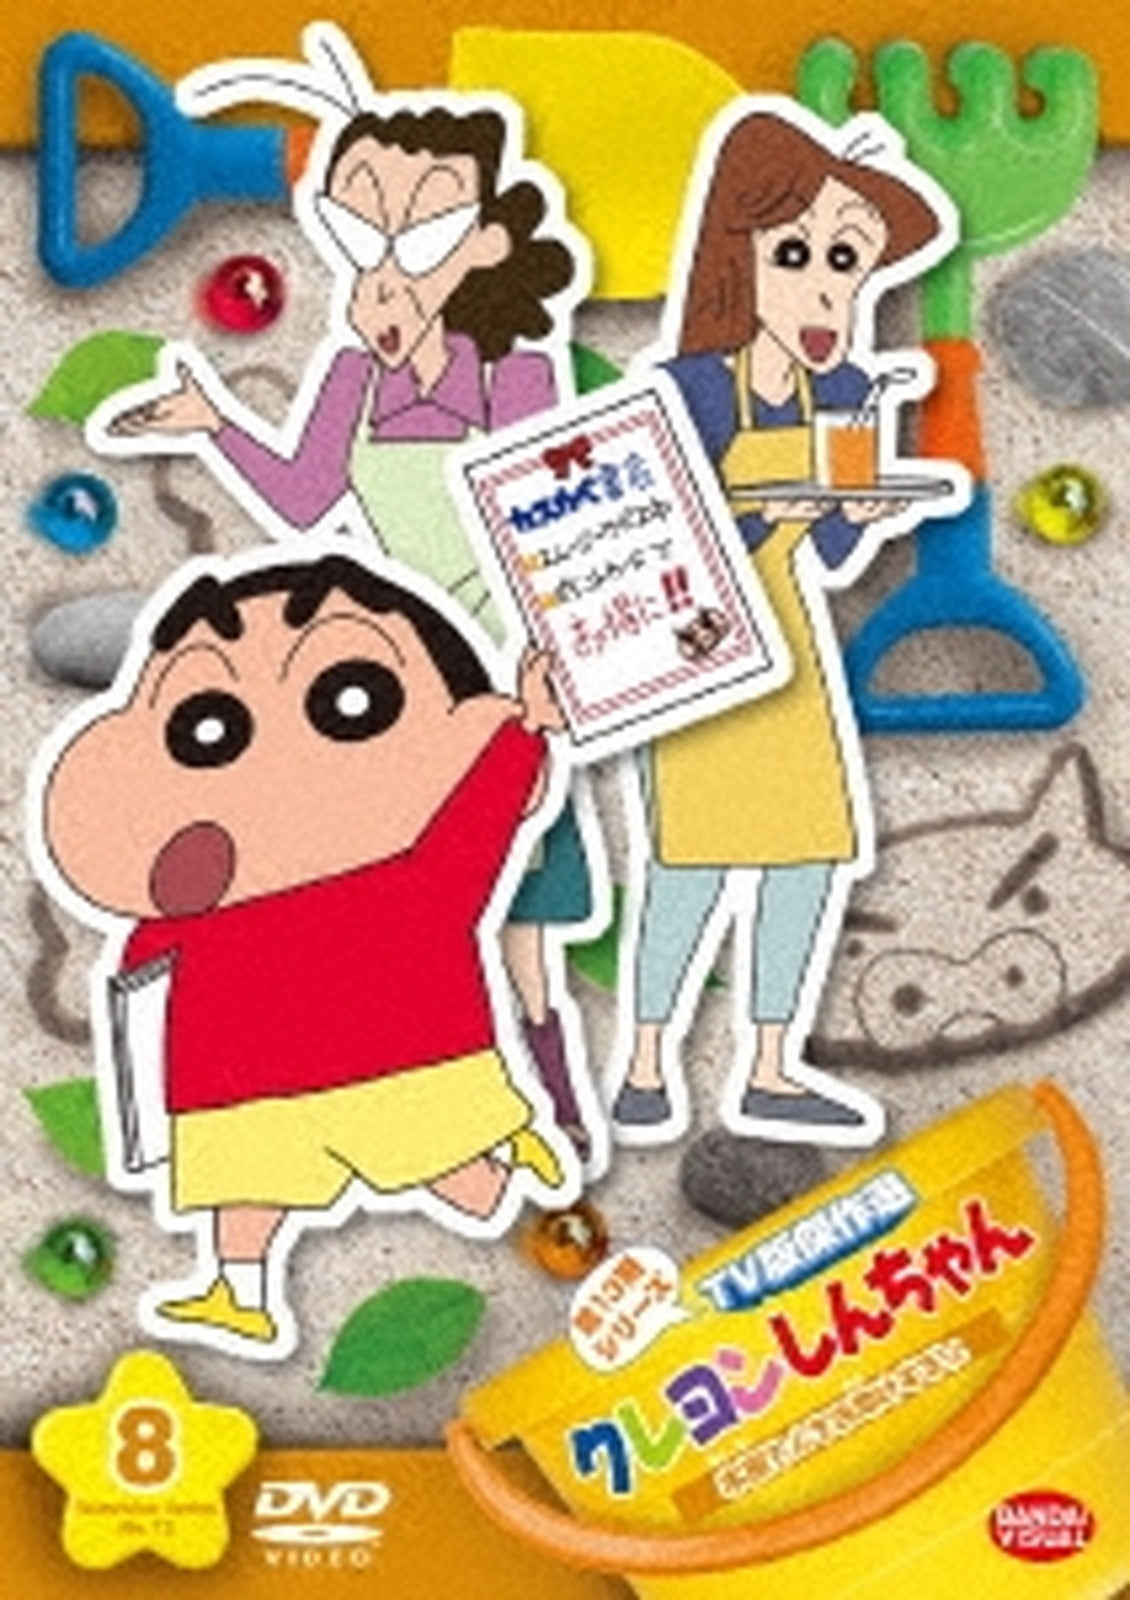 Animation - Crayon Shin-chan TV Ban Kessaku Sen Dai 13 Ki Series 8 Hon –  CDs Vinyl Japan Store 2019